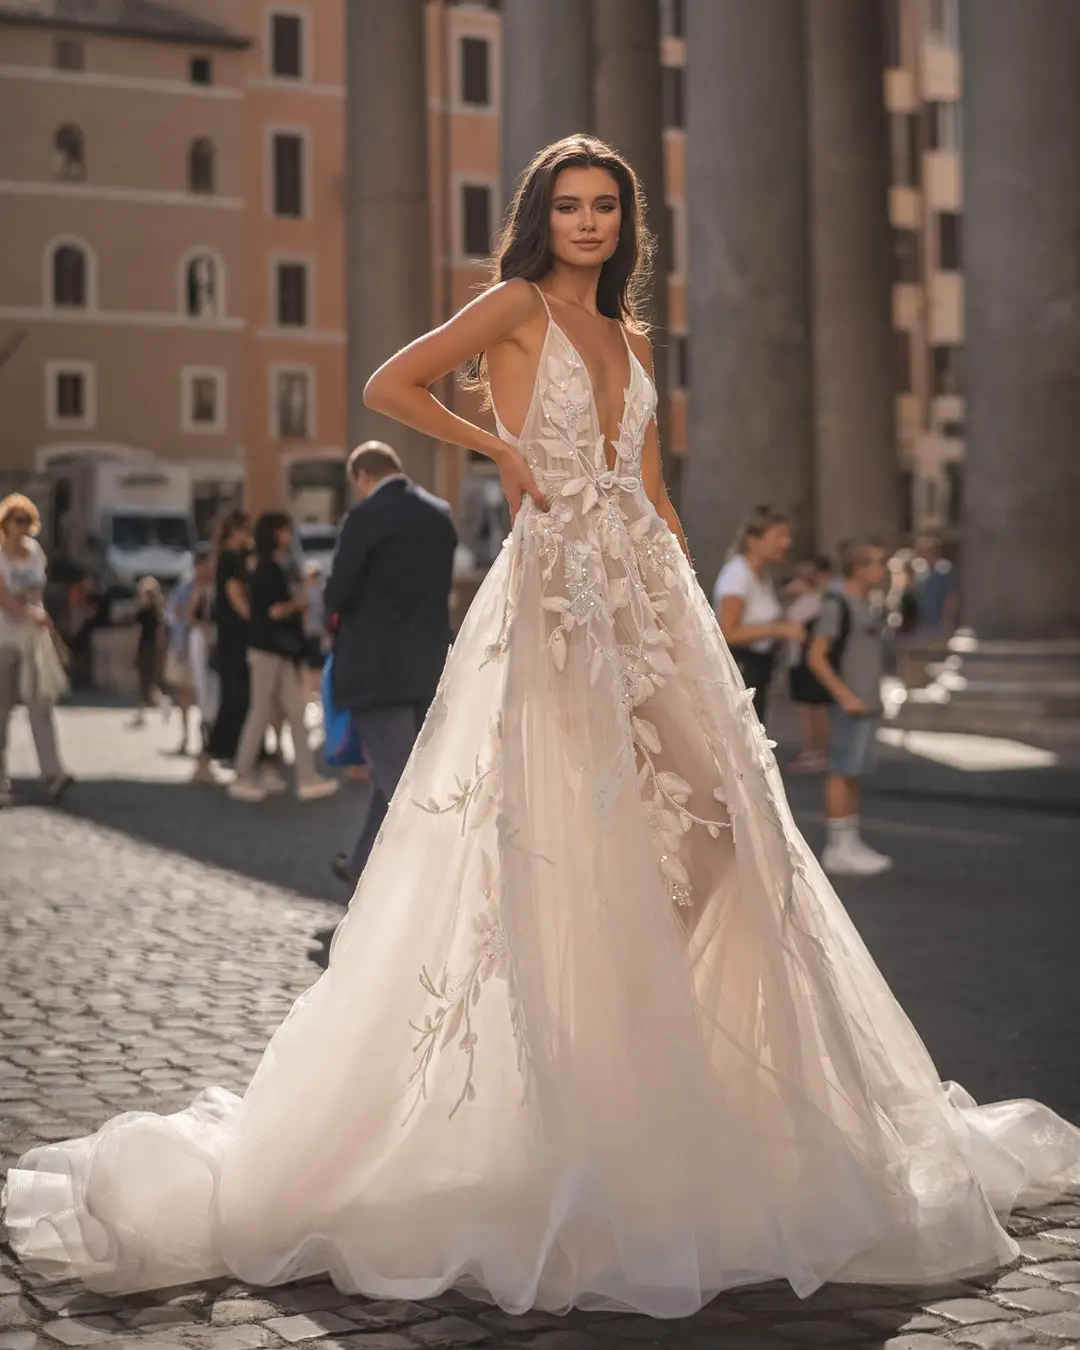 The Most Beautiful Bridesmaid Dresses